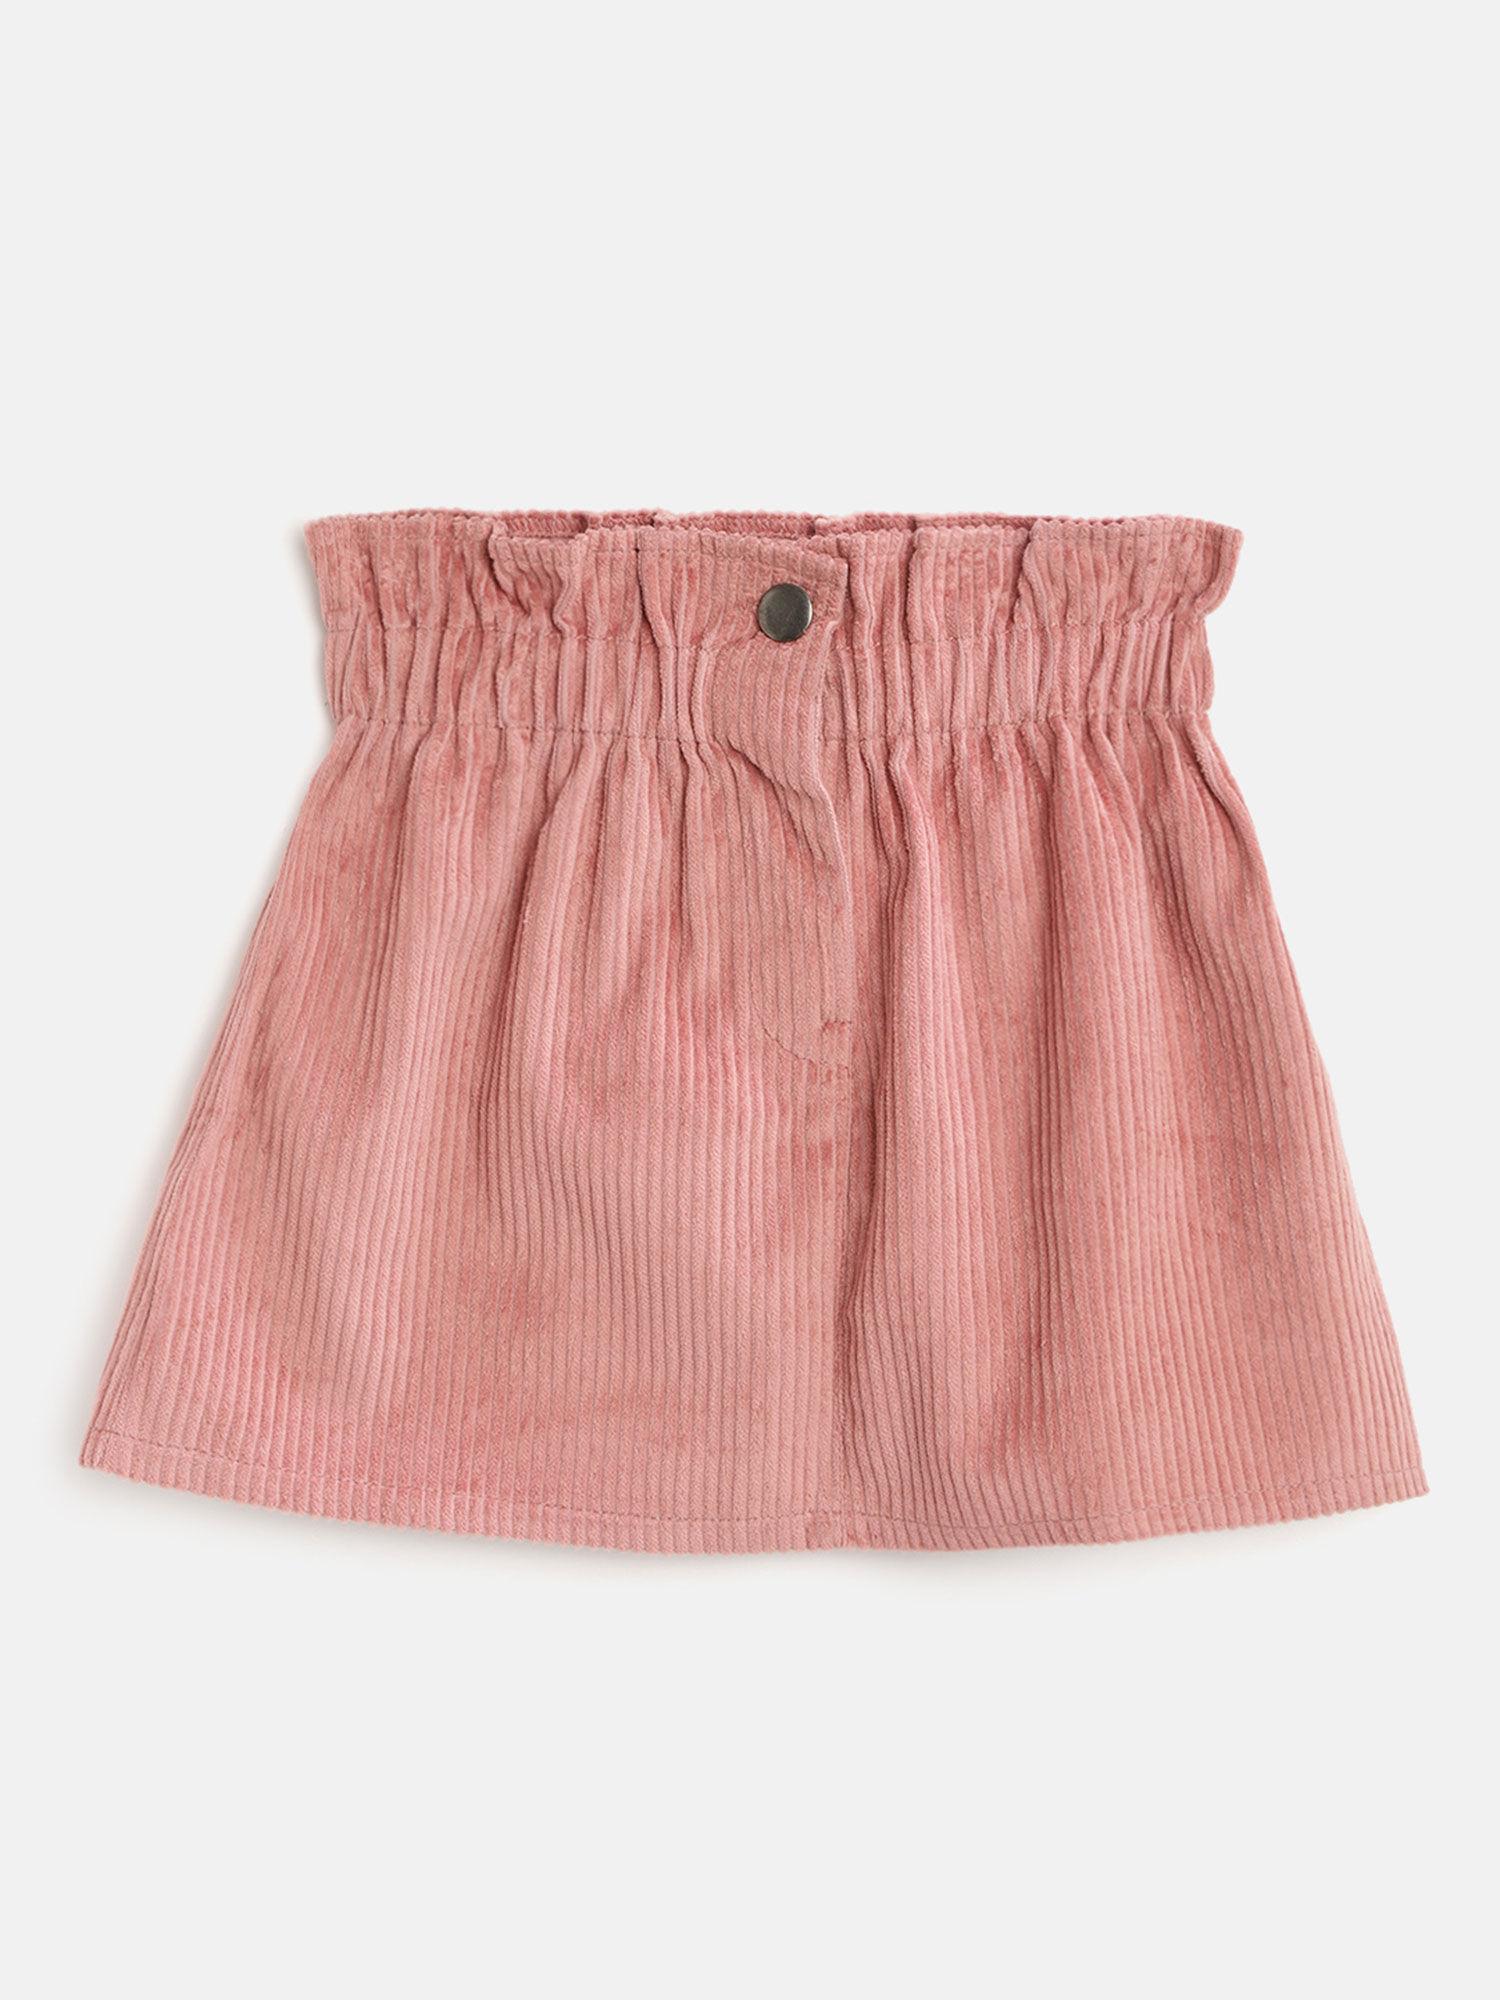 corduroy solid pink skirt